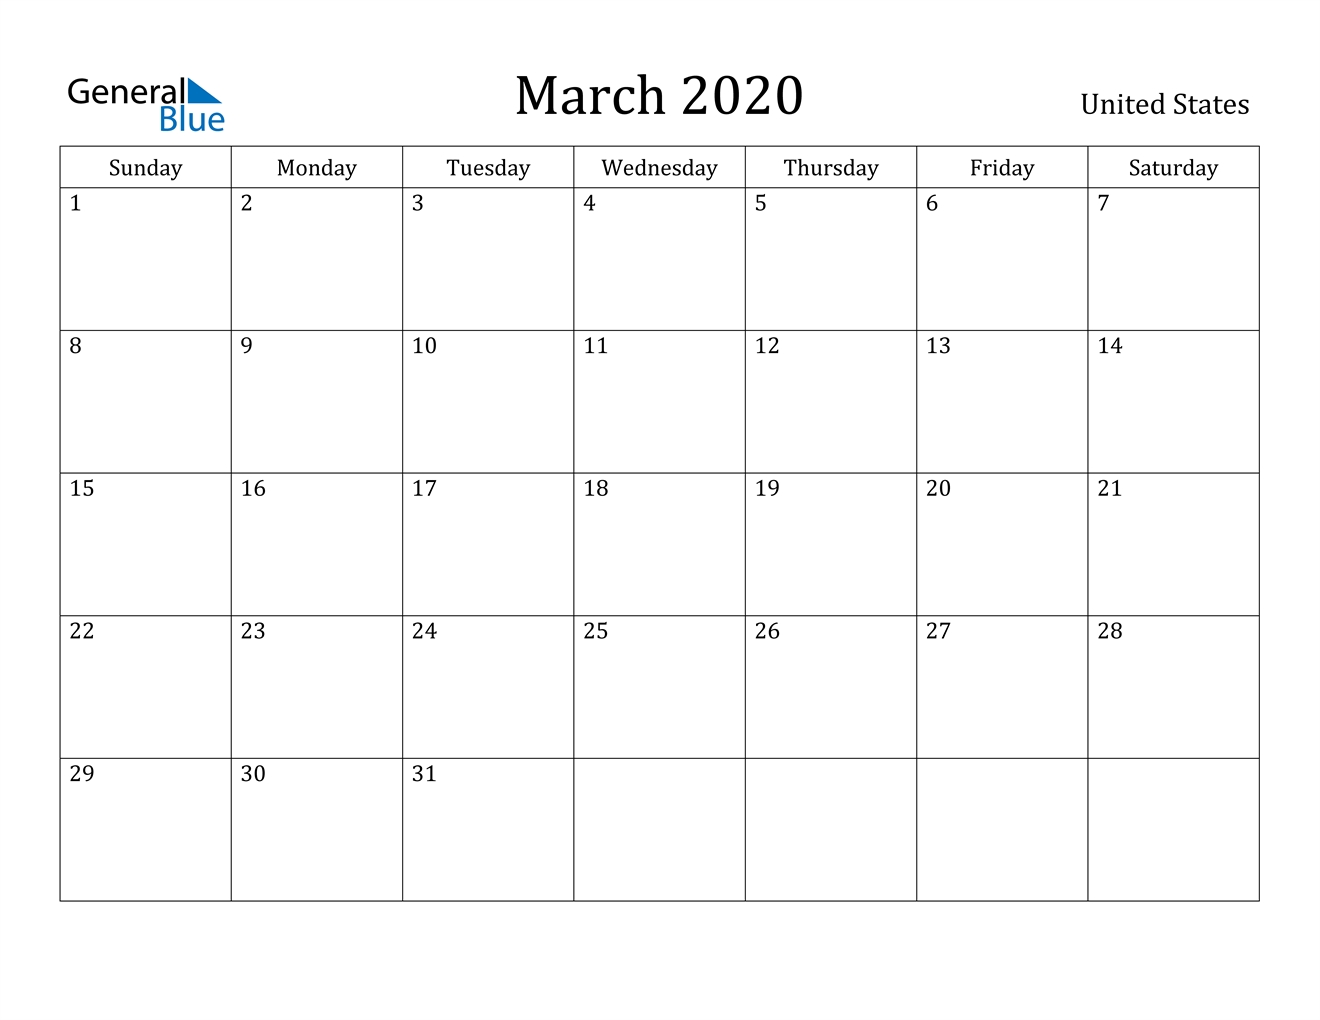 March 2020 Calendar - United States